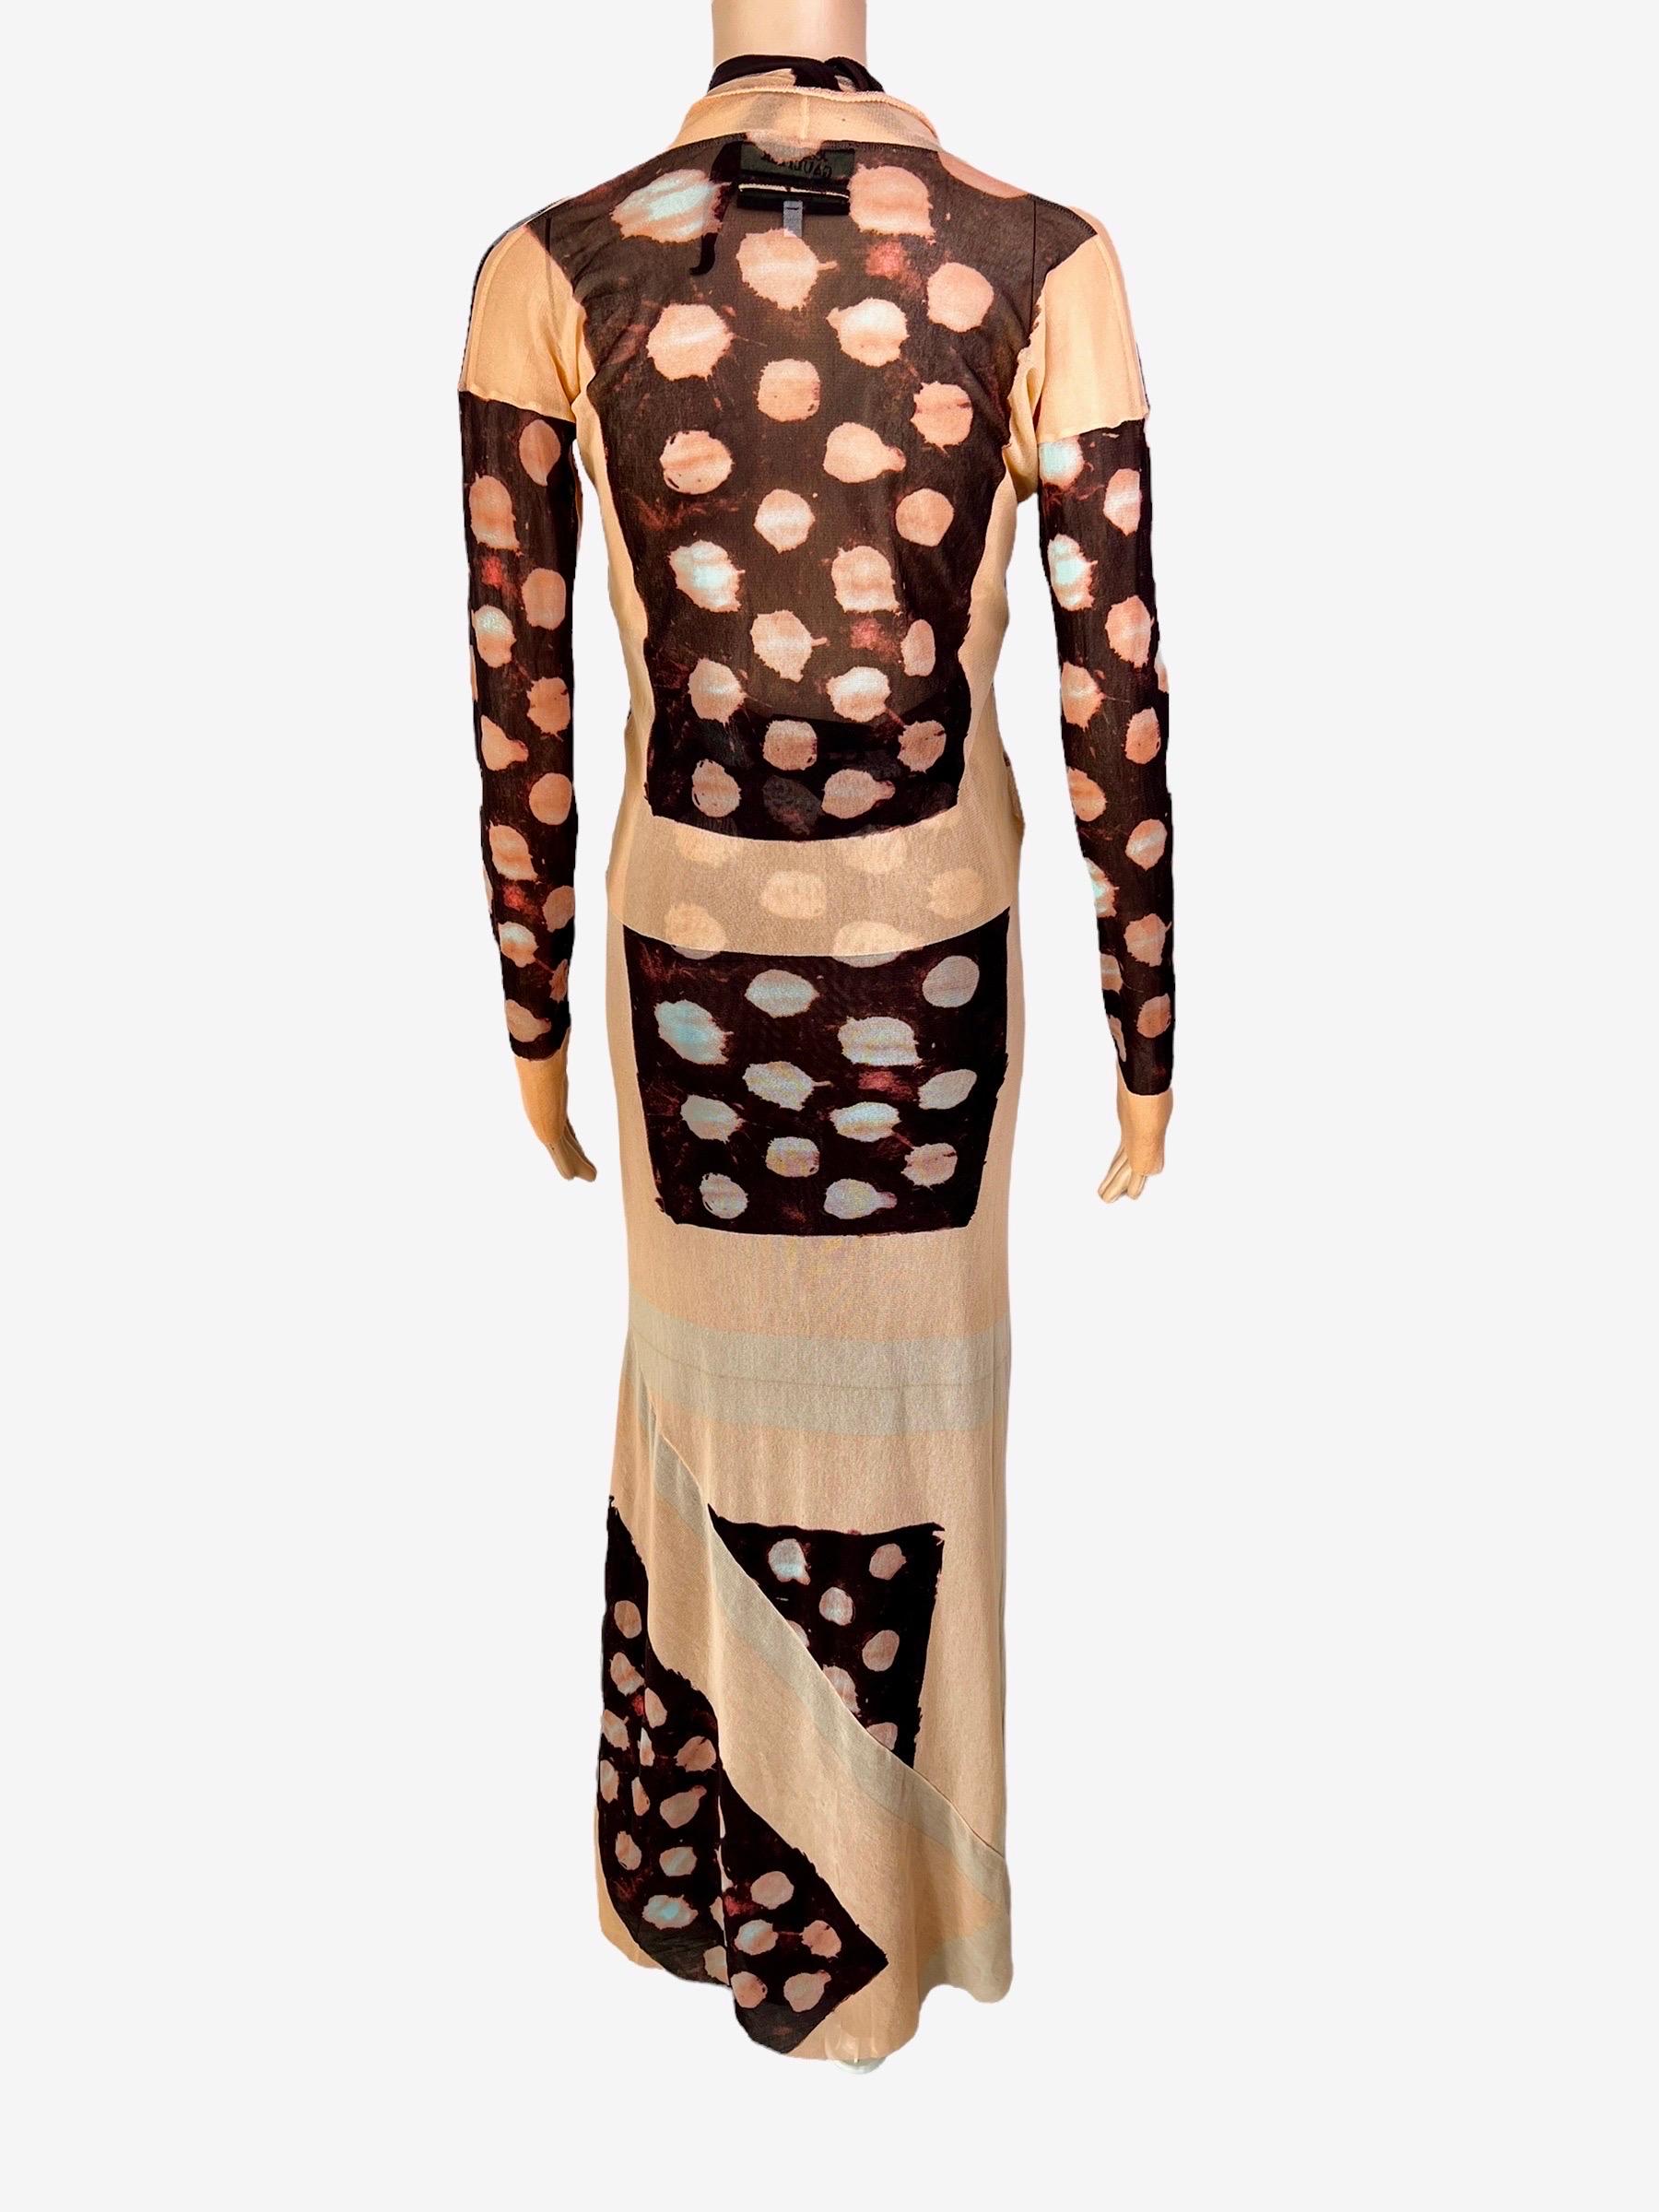 Jean Paul Gaultier S/S 2001 Sheer Polka Dot Cardigan Top& Maxi Dress 2 Piece Set In Good Condition In Naples, FL